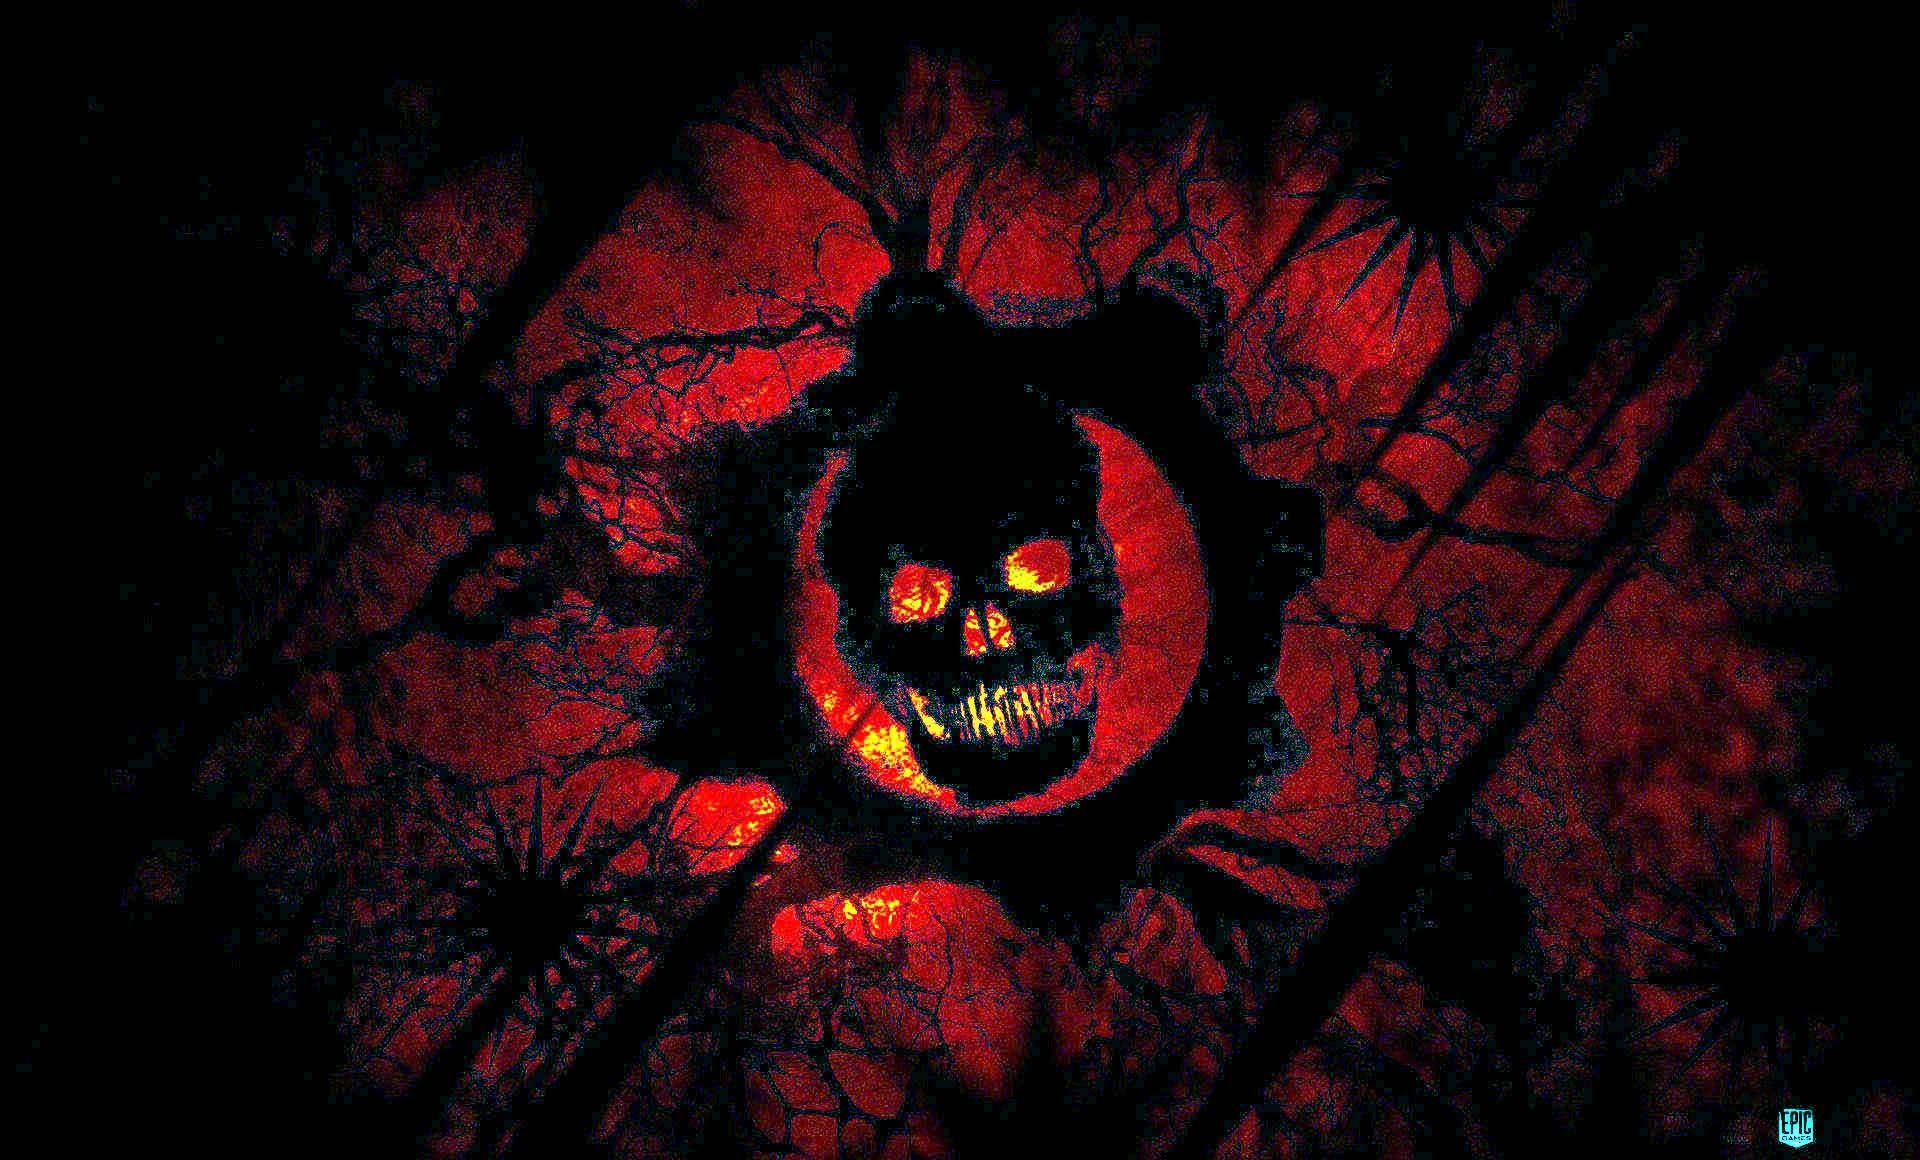 Gears of War 4 Game Wallpaper Ultra HD Quality. Skull